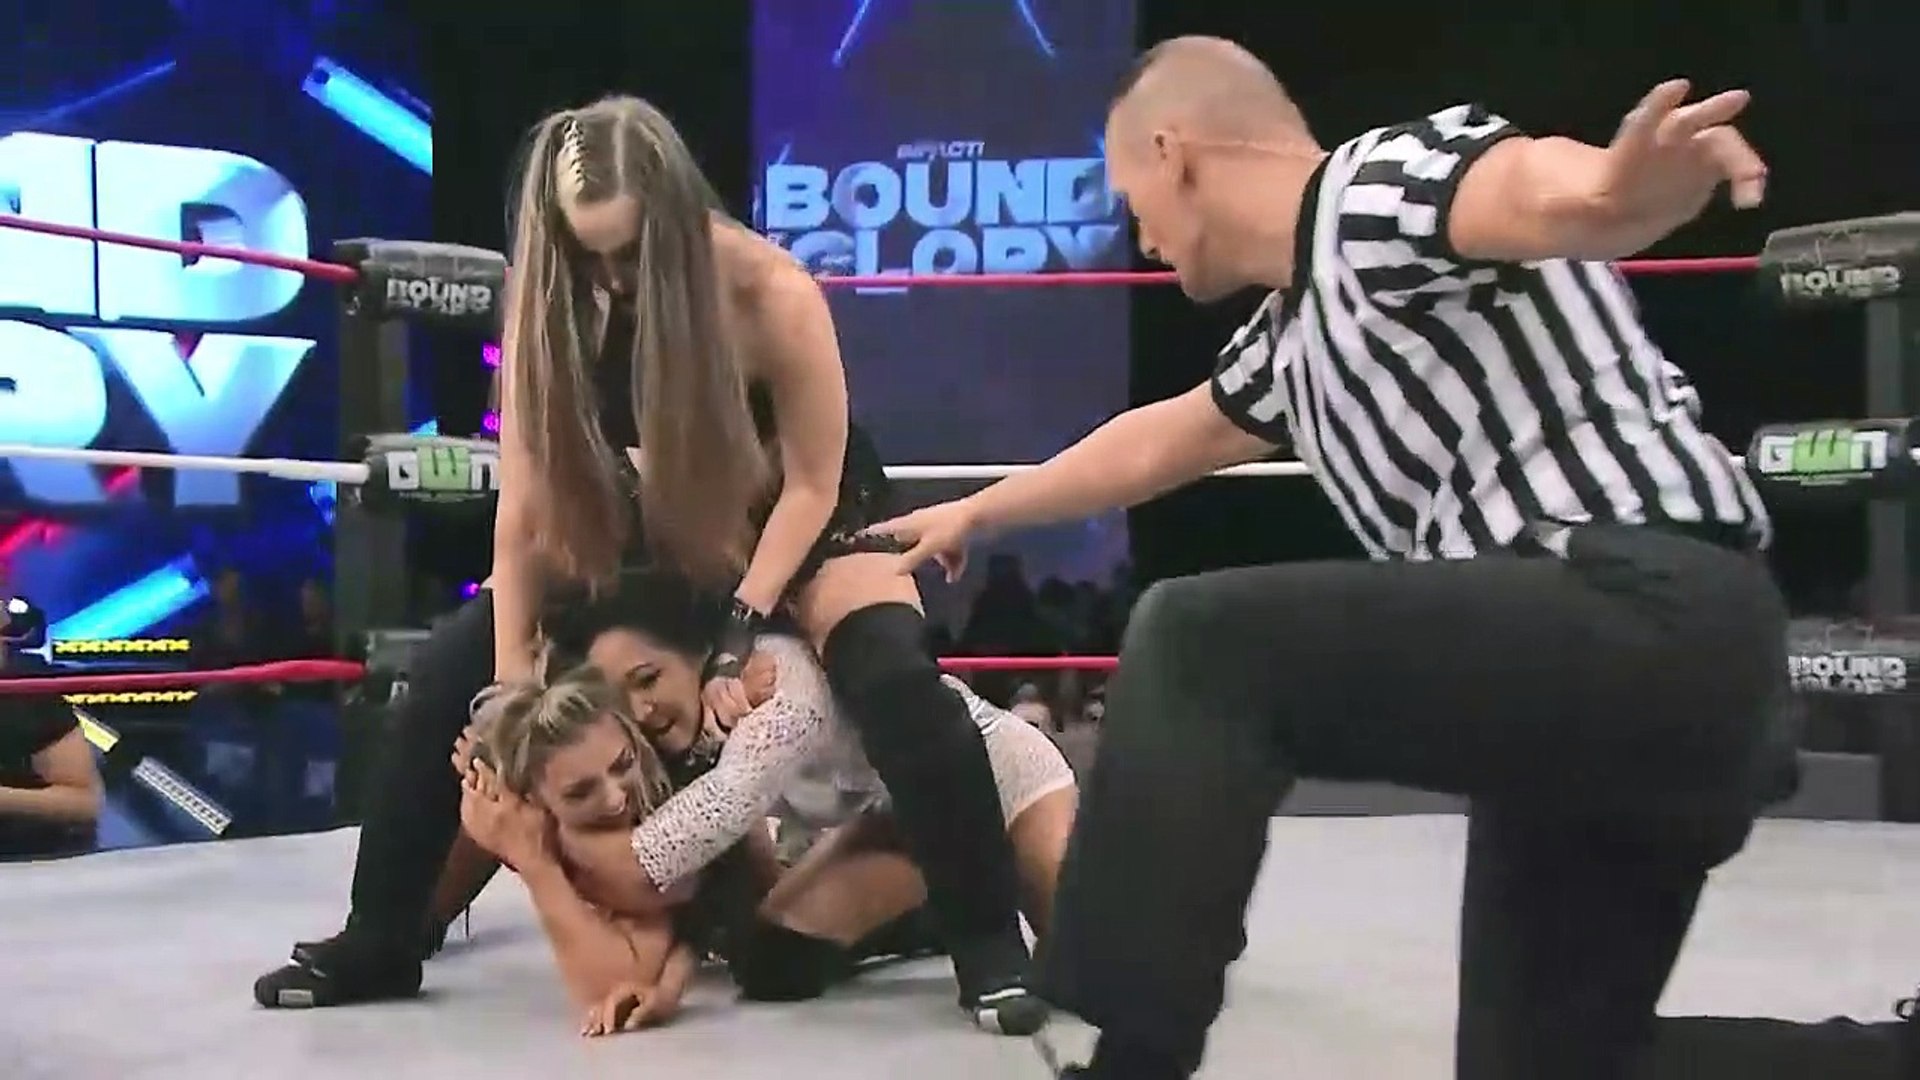 FULL MATCH - Gail Kim vs Sienna (Allysin Kay) vs Allie - Three-way match -  Impact Knockouts Championship - Bound For Glory 2017 - video Dailymotion